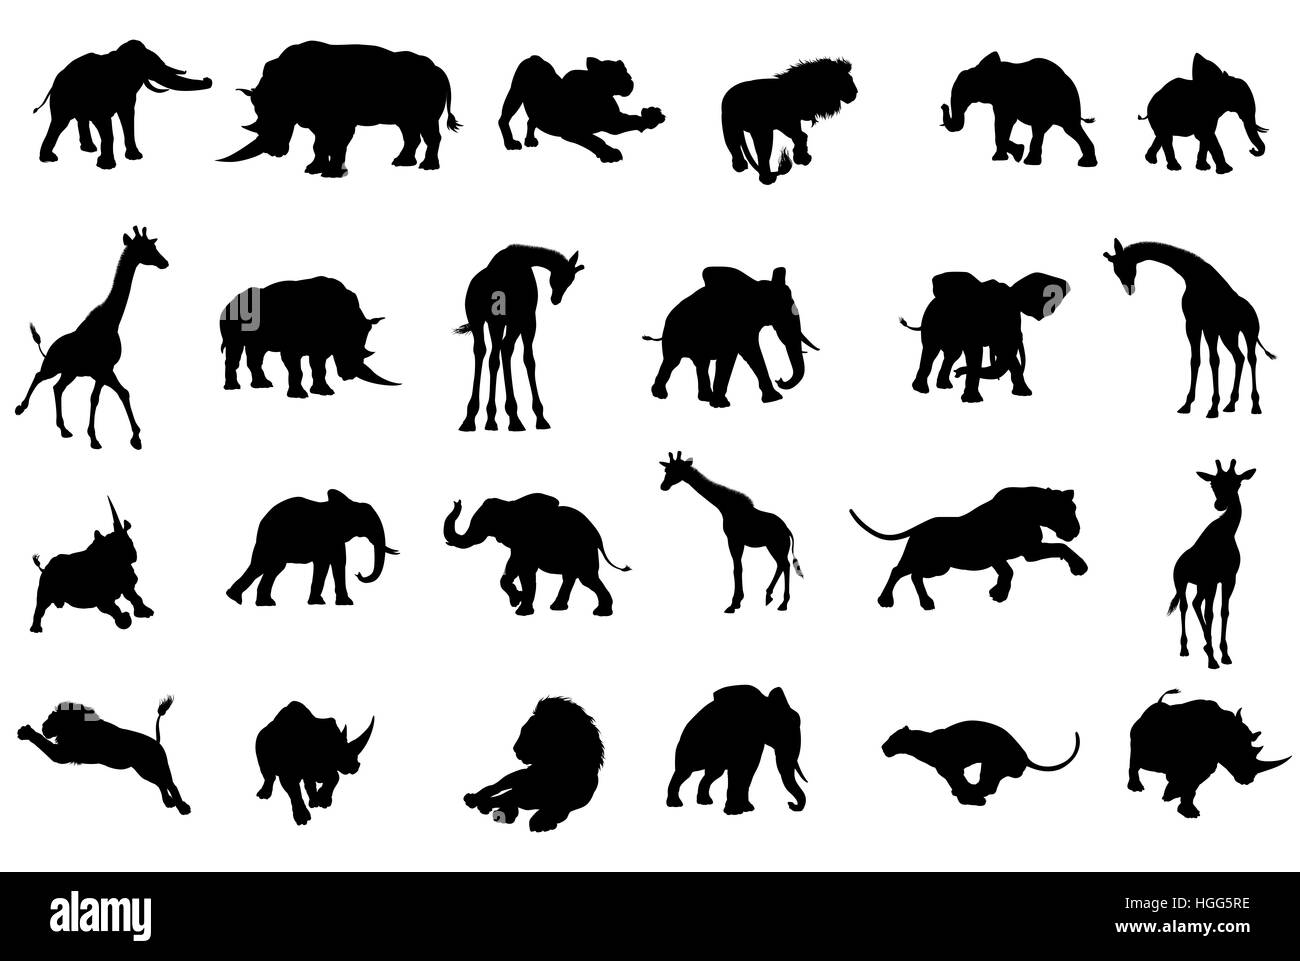 Un safari africano silueta animales como elefantes, jirafas, rinocerontes y leones Foto de stock